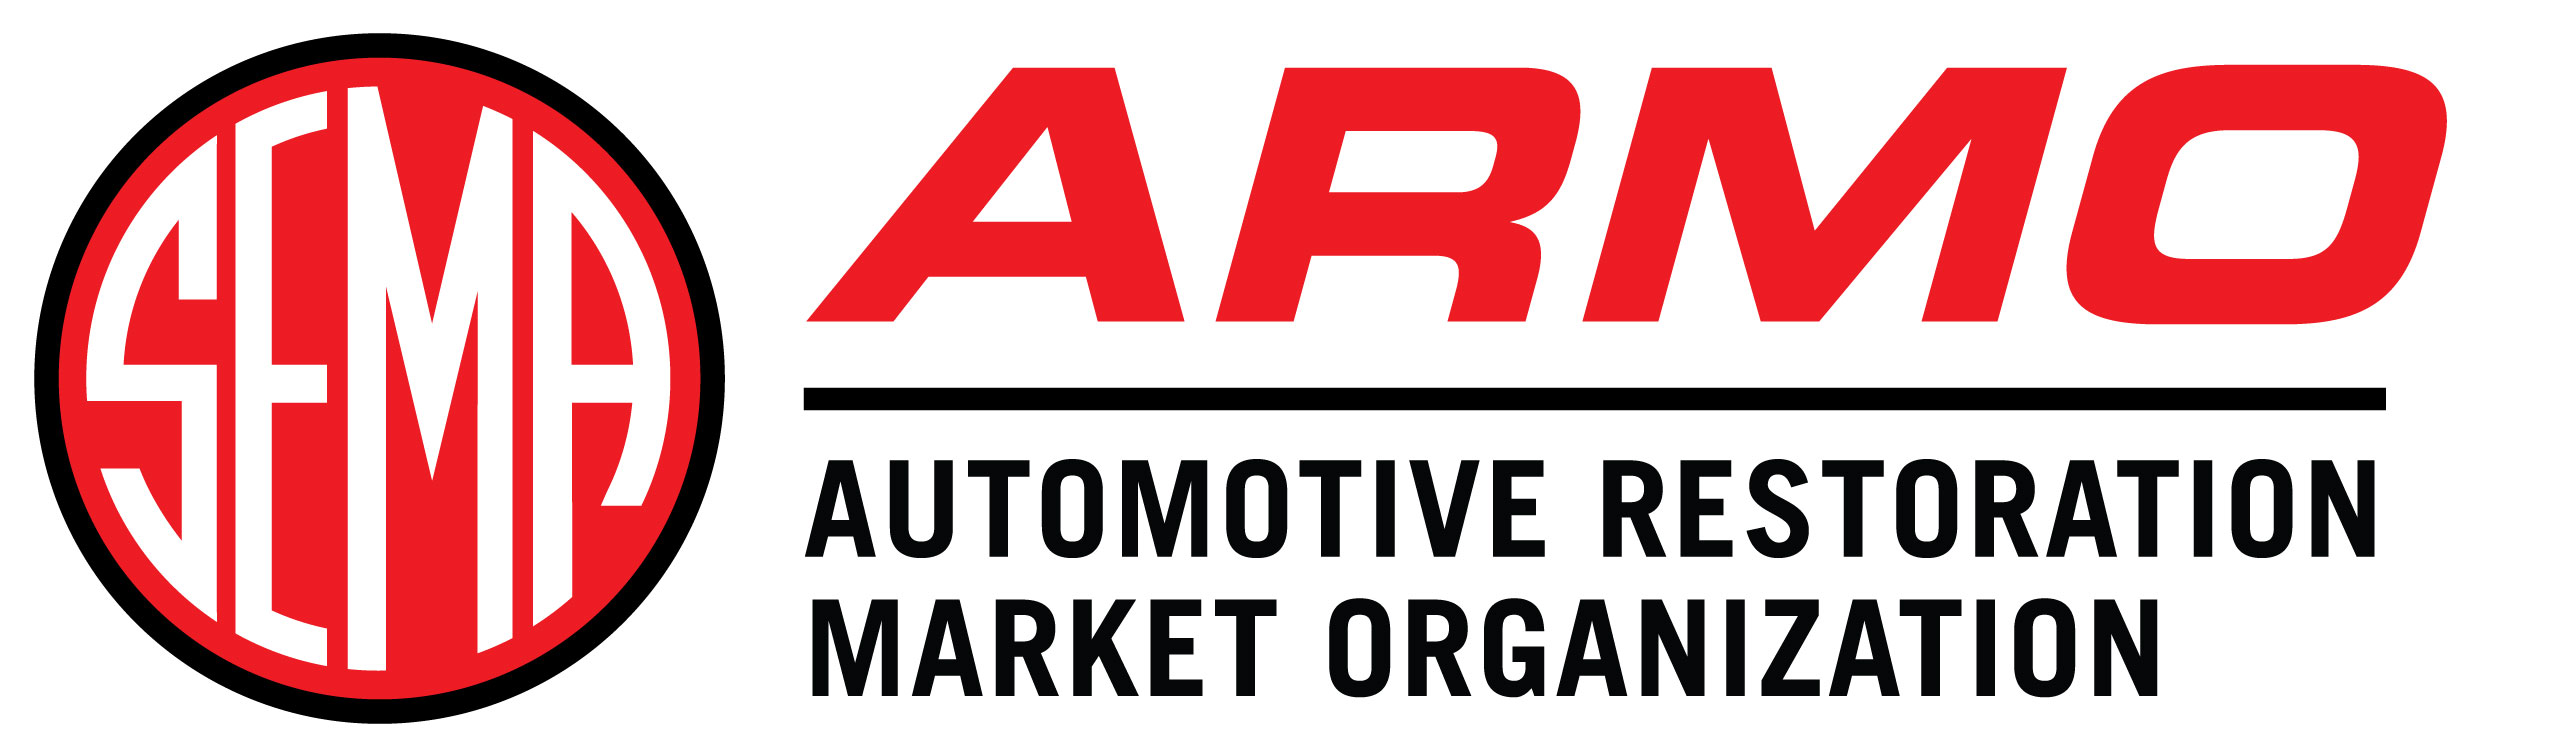 Automotive Restoration Market Organization (ARMO) - logo